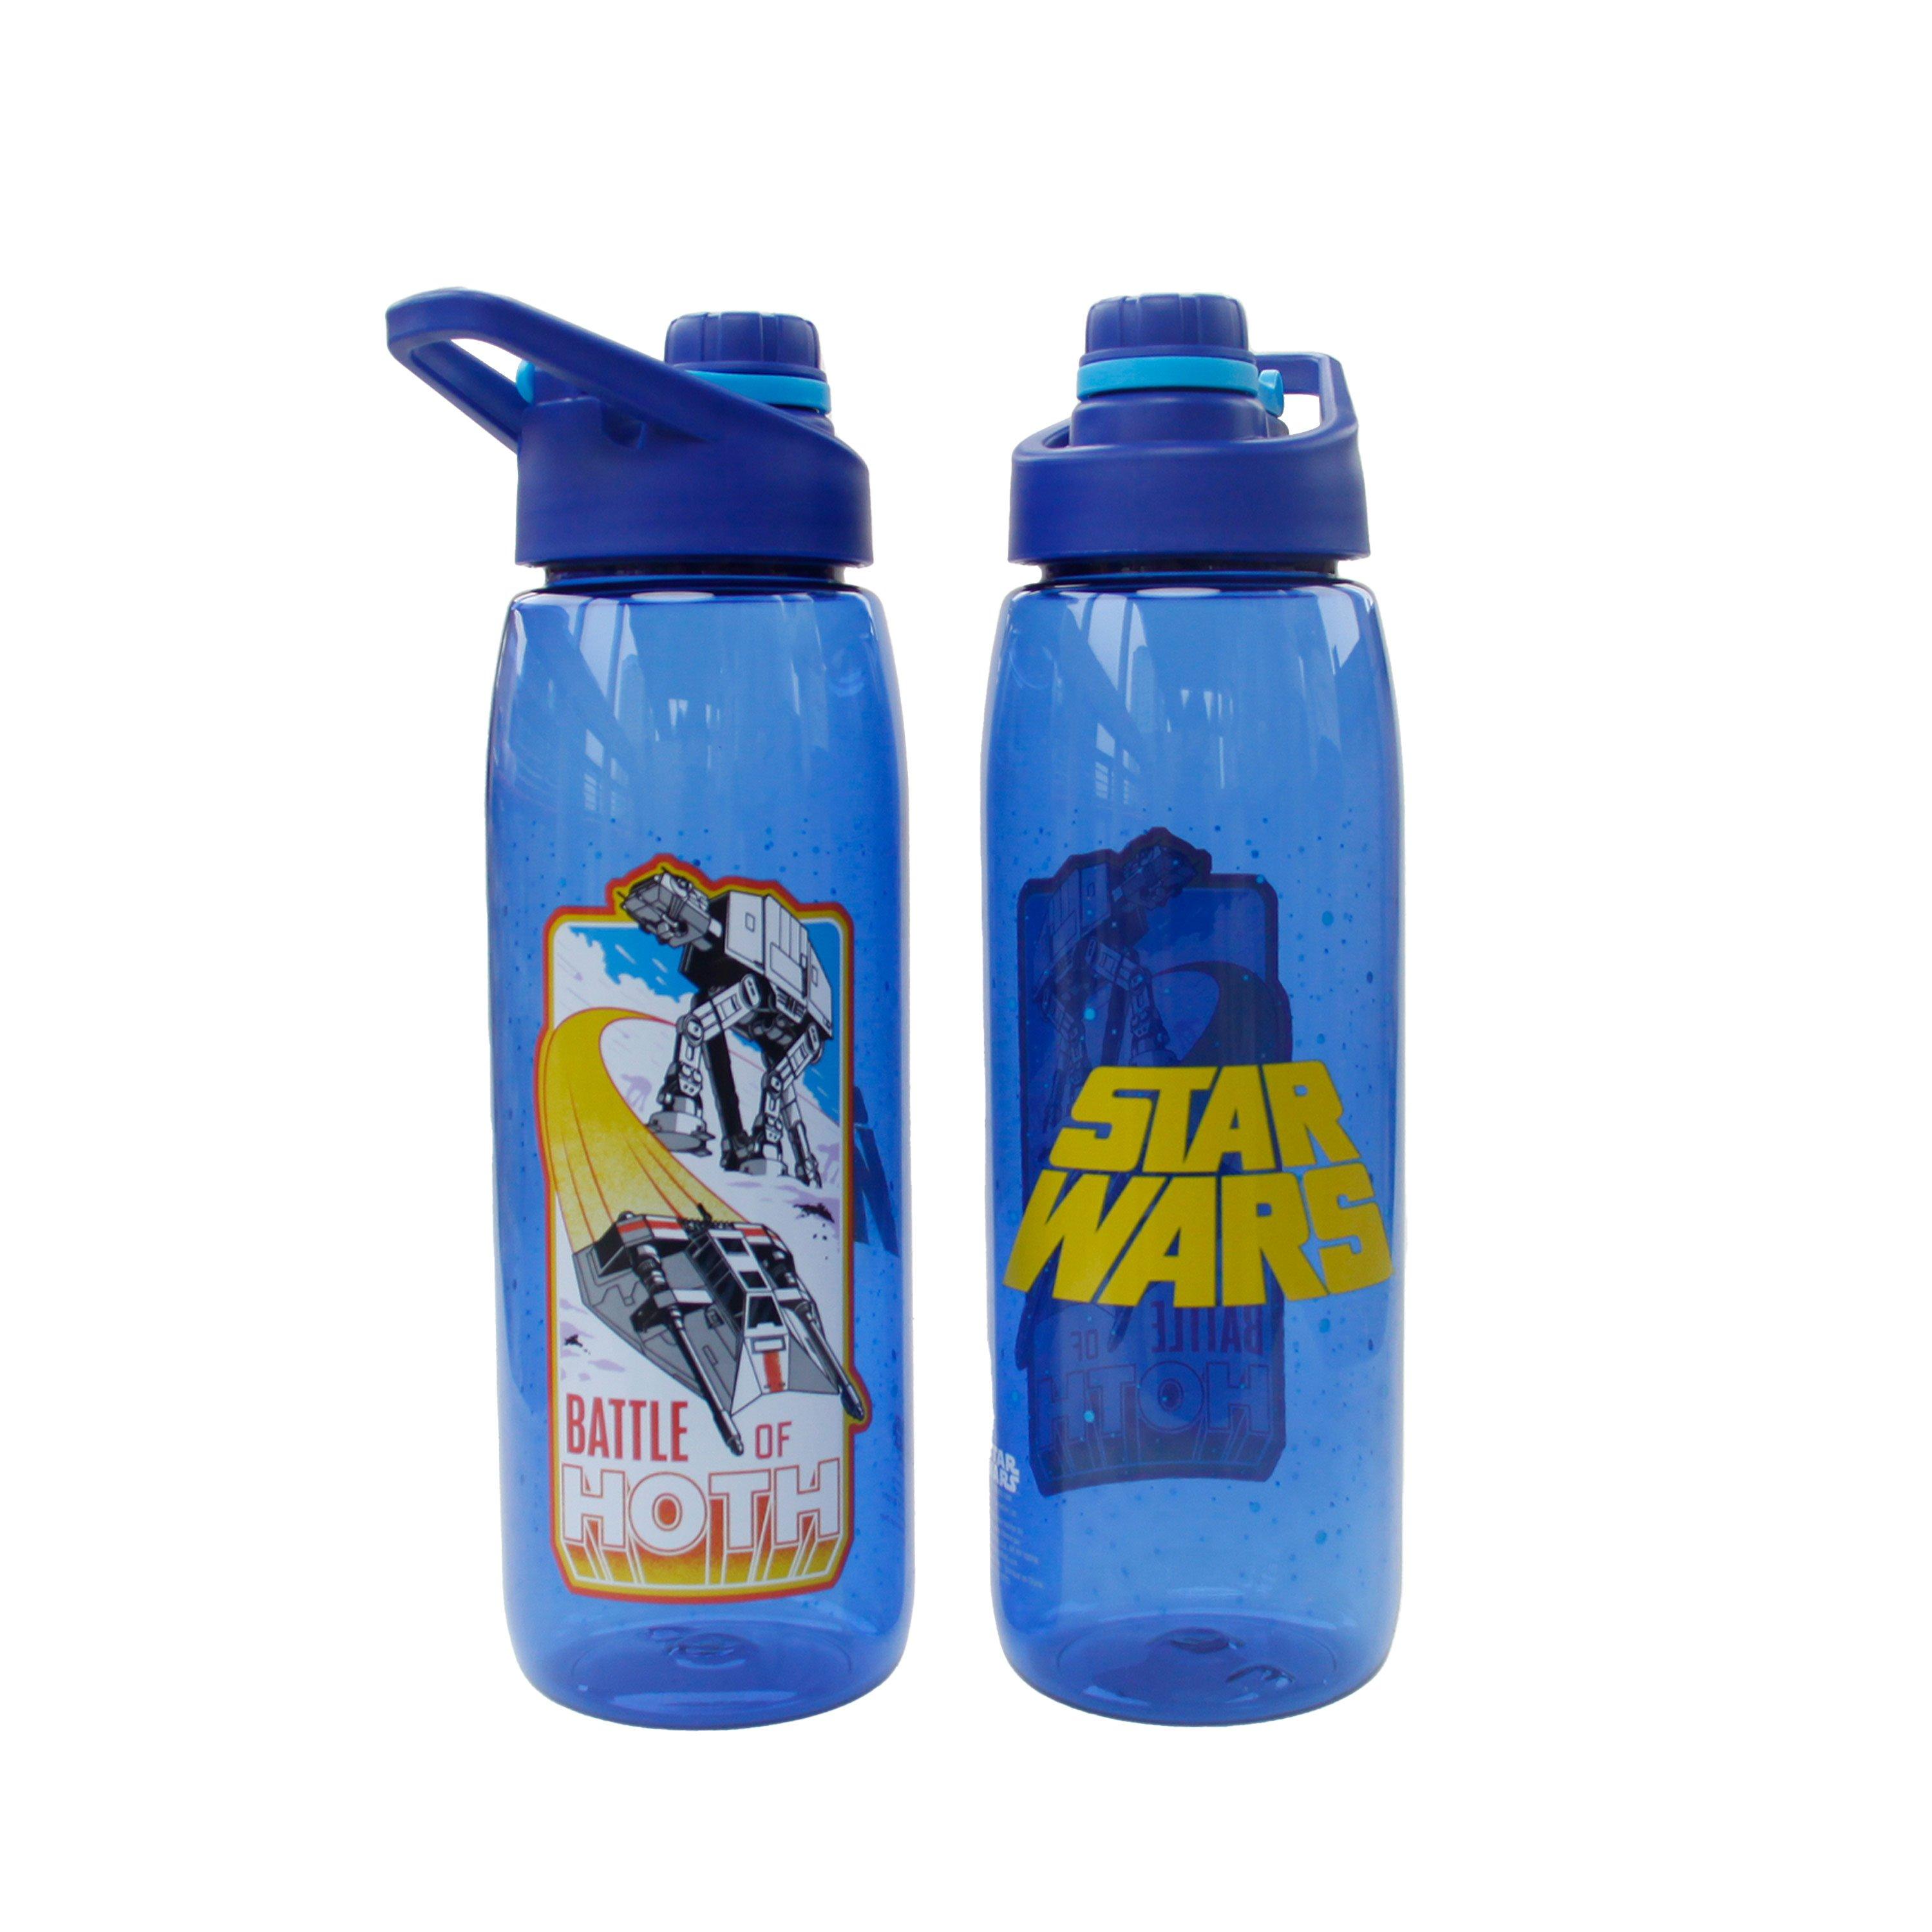 Silver Buffalo Star Wars Vintage Battle of Hoth 28-oz Water Bottle with Screw Lid